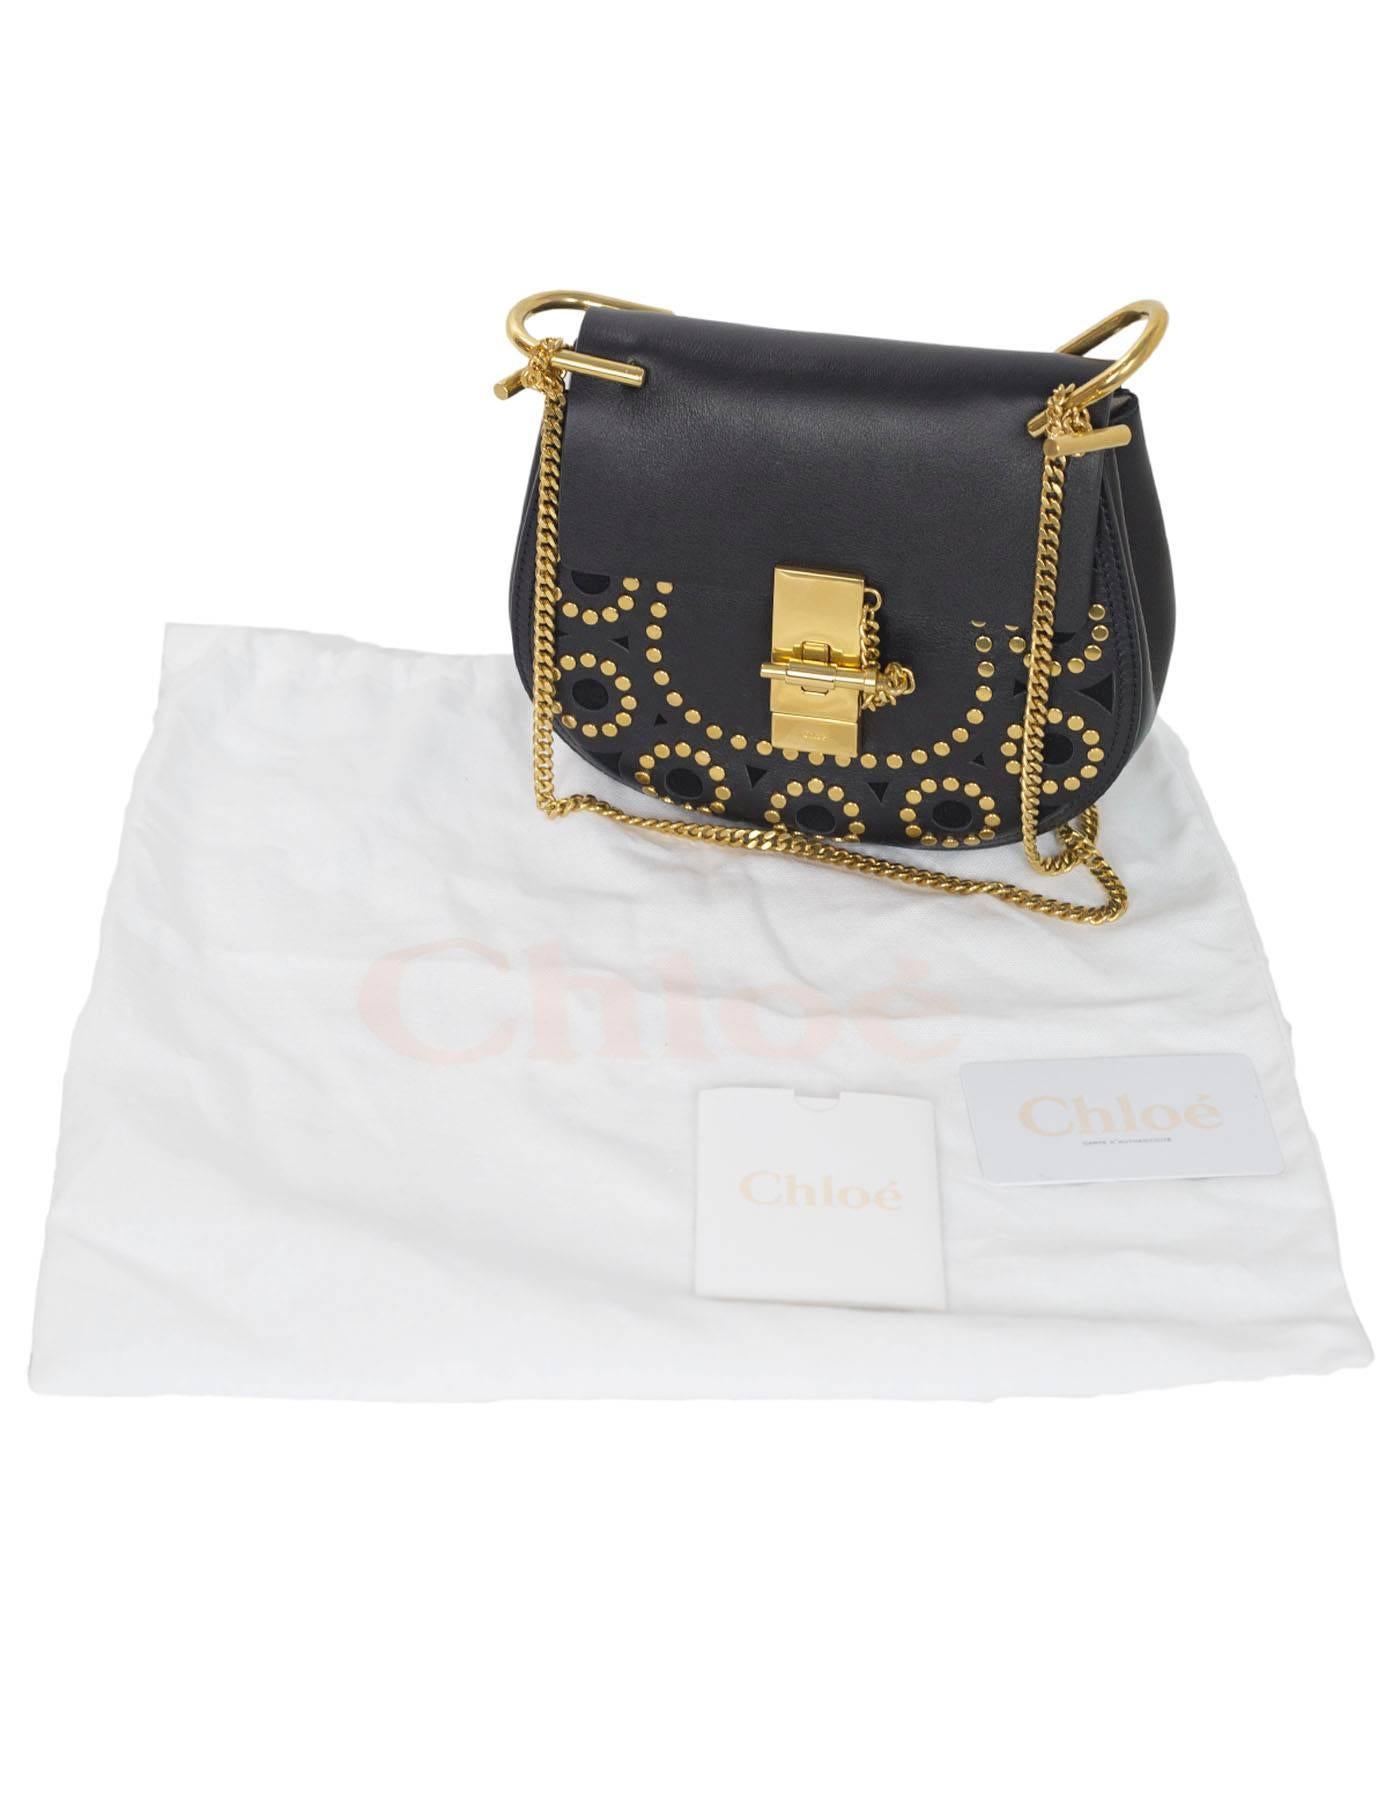 Chloe Black Leather Small Drew Studded Crossbody Bag rt. $2, 150 4